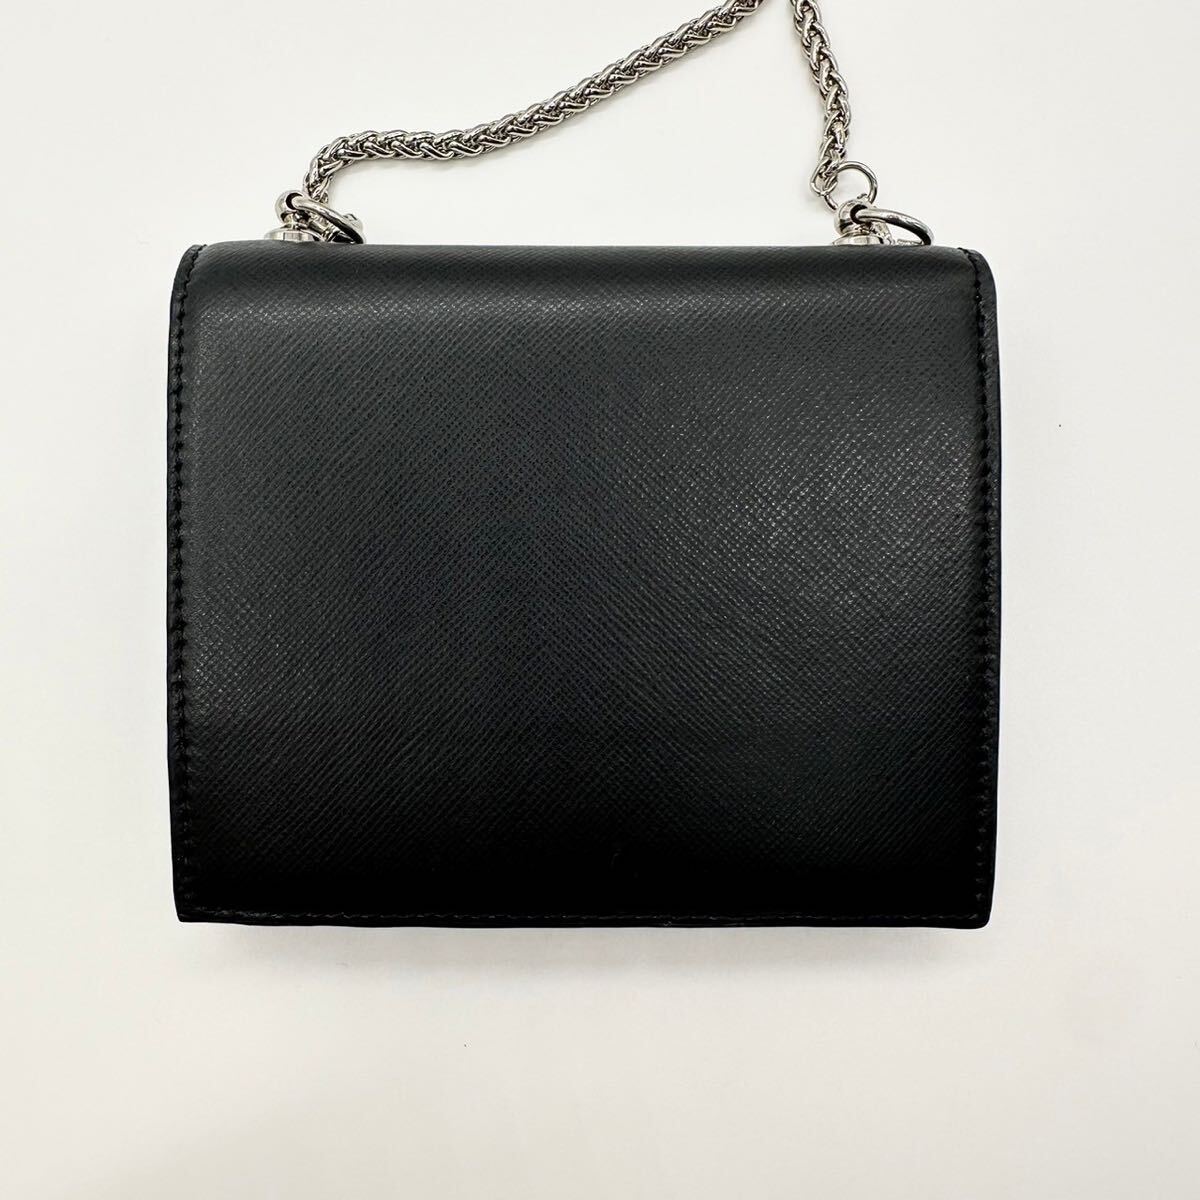 Vivienne Westwood ヴィヴィアンウエストウッド 二つ折り財布 ブラック オーブ チェーンウォレット レディース ショルダー